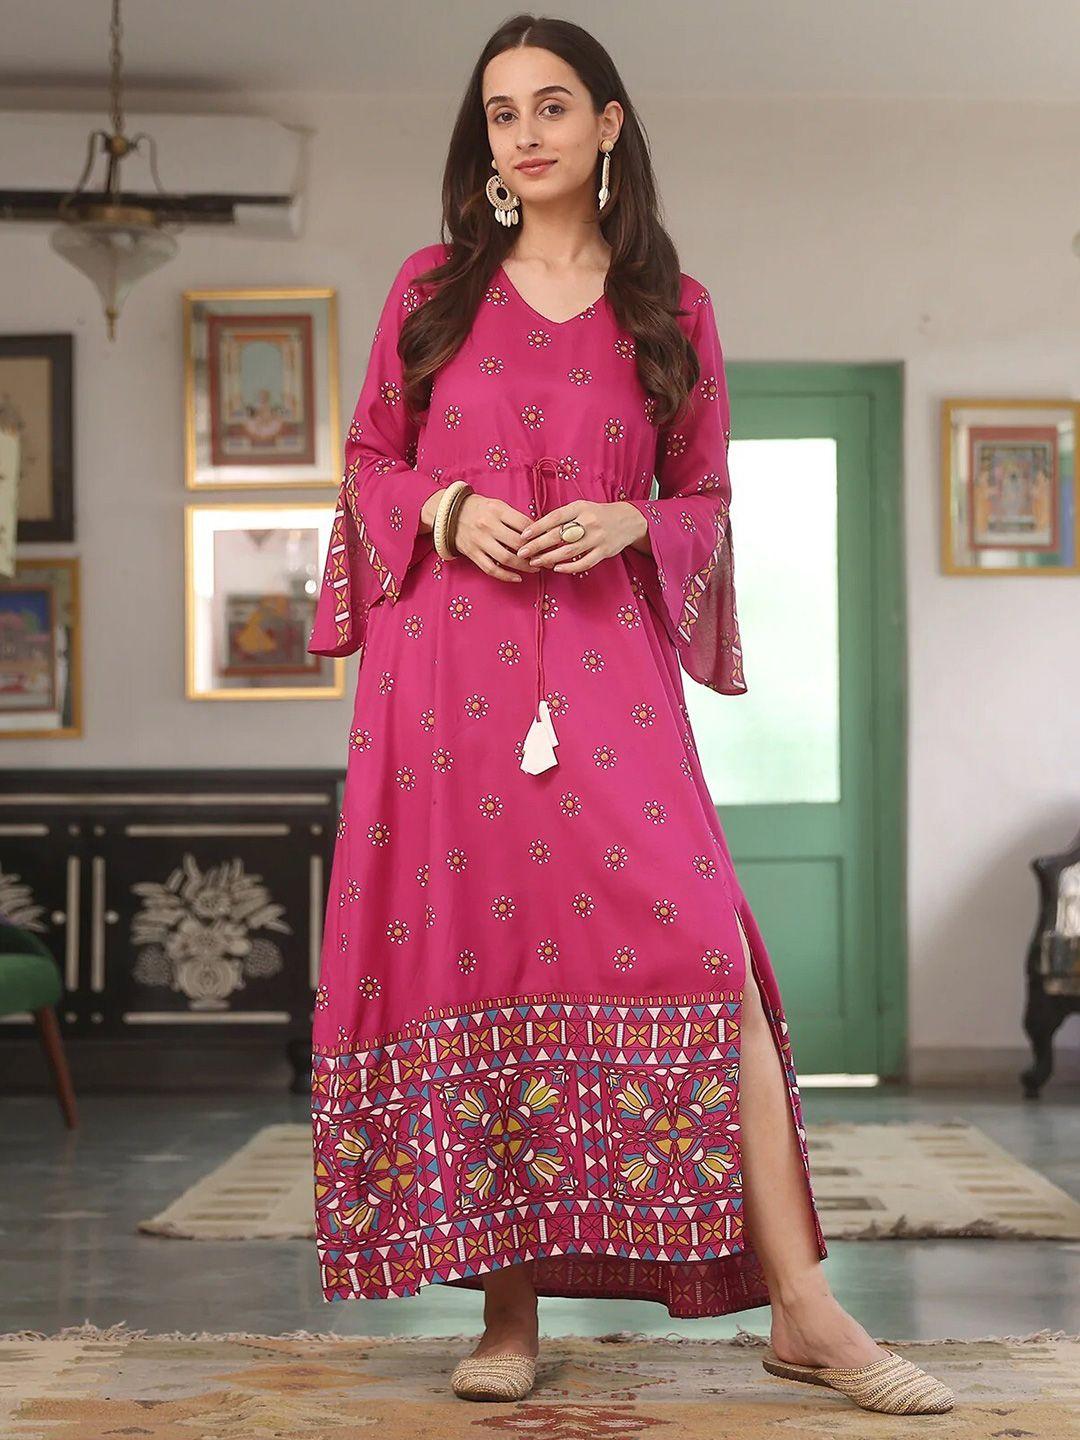 rustorange women pink ethnic motifs maxi dress